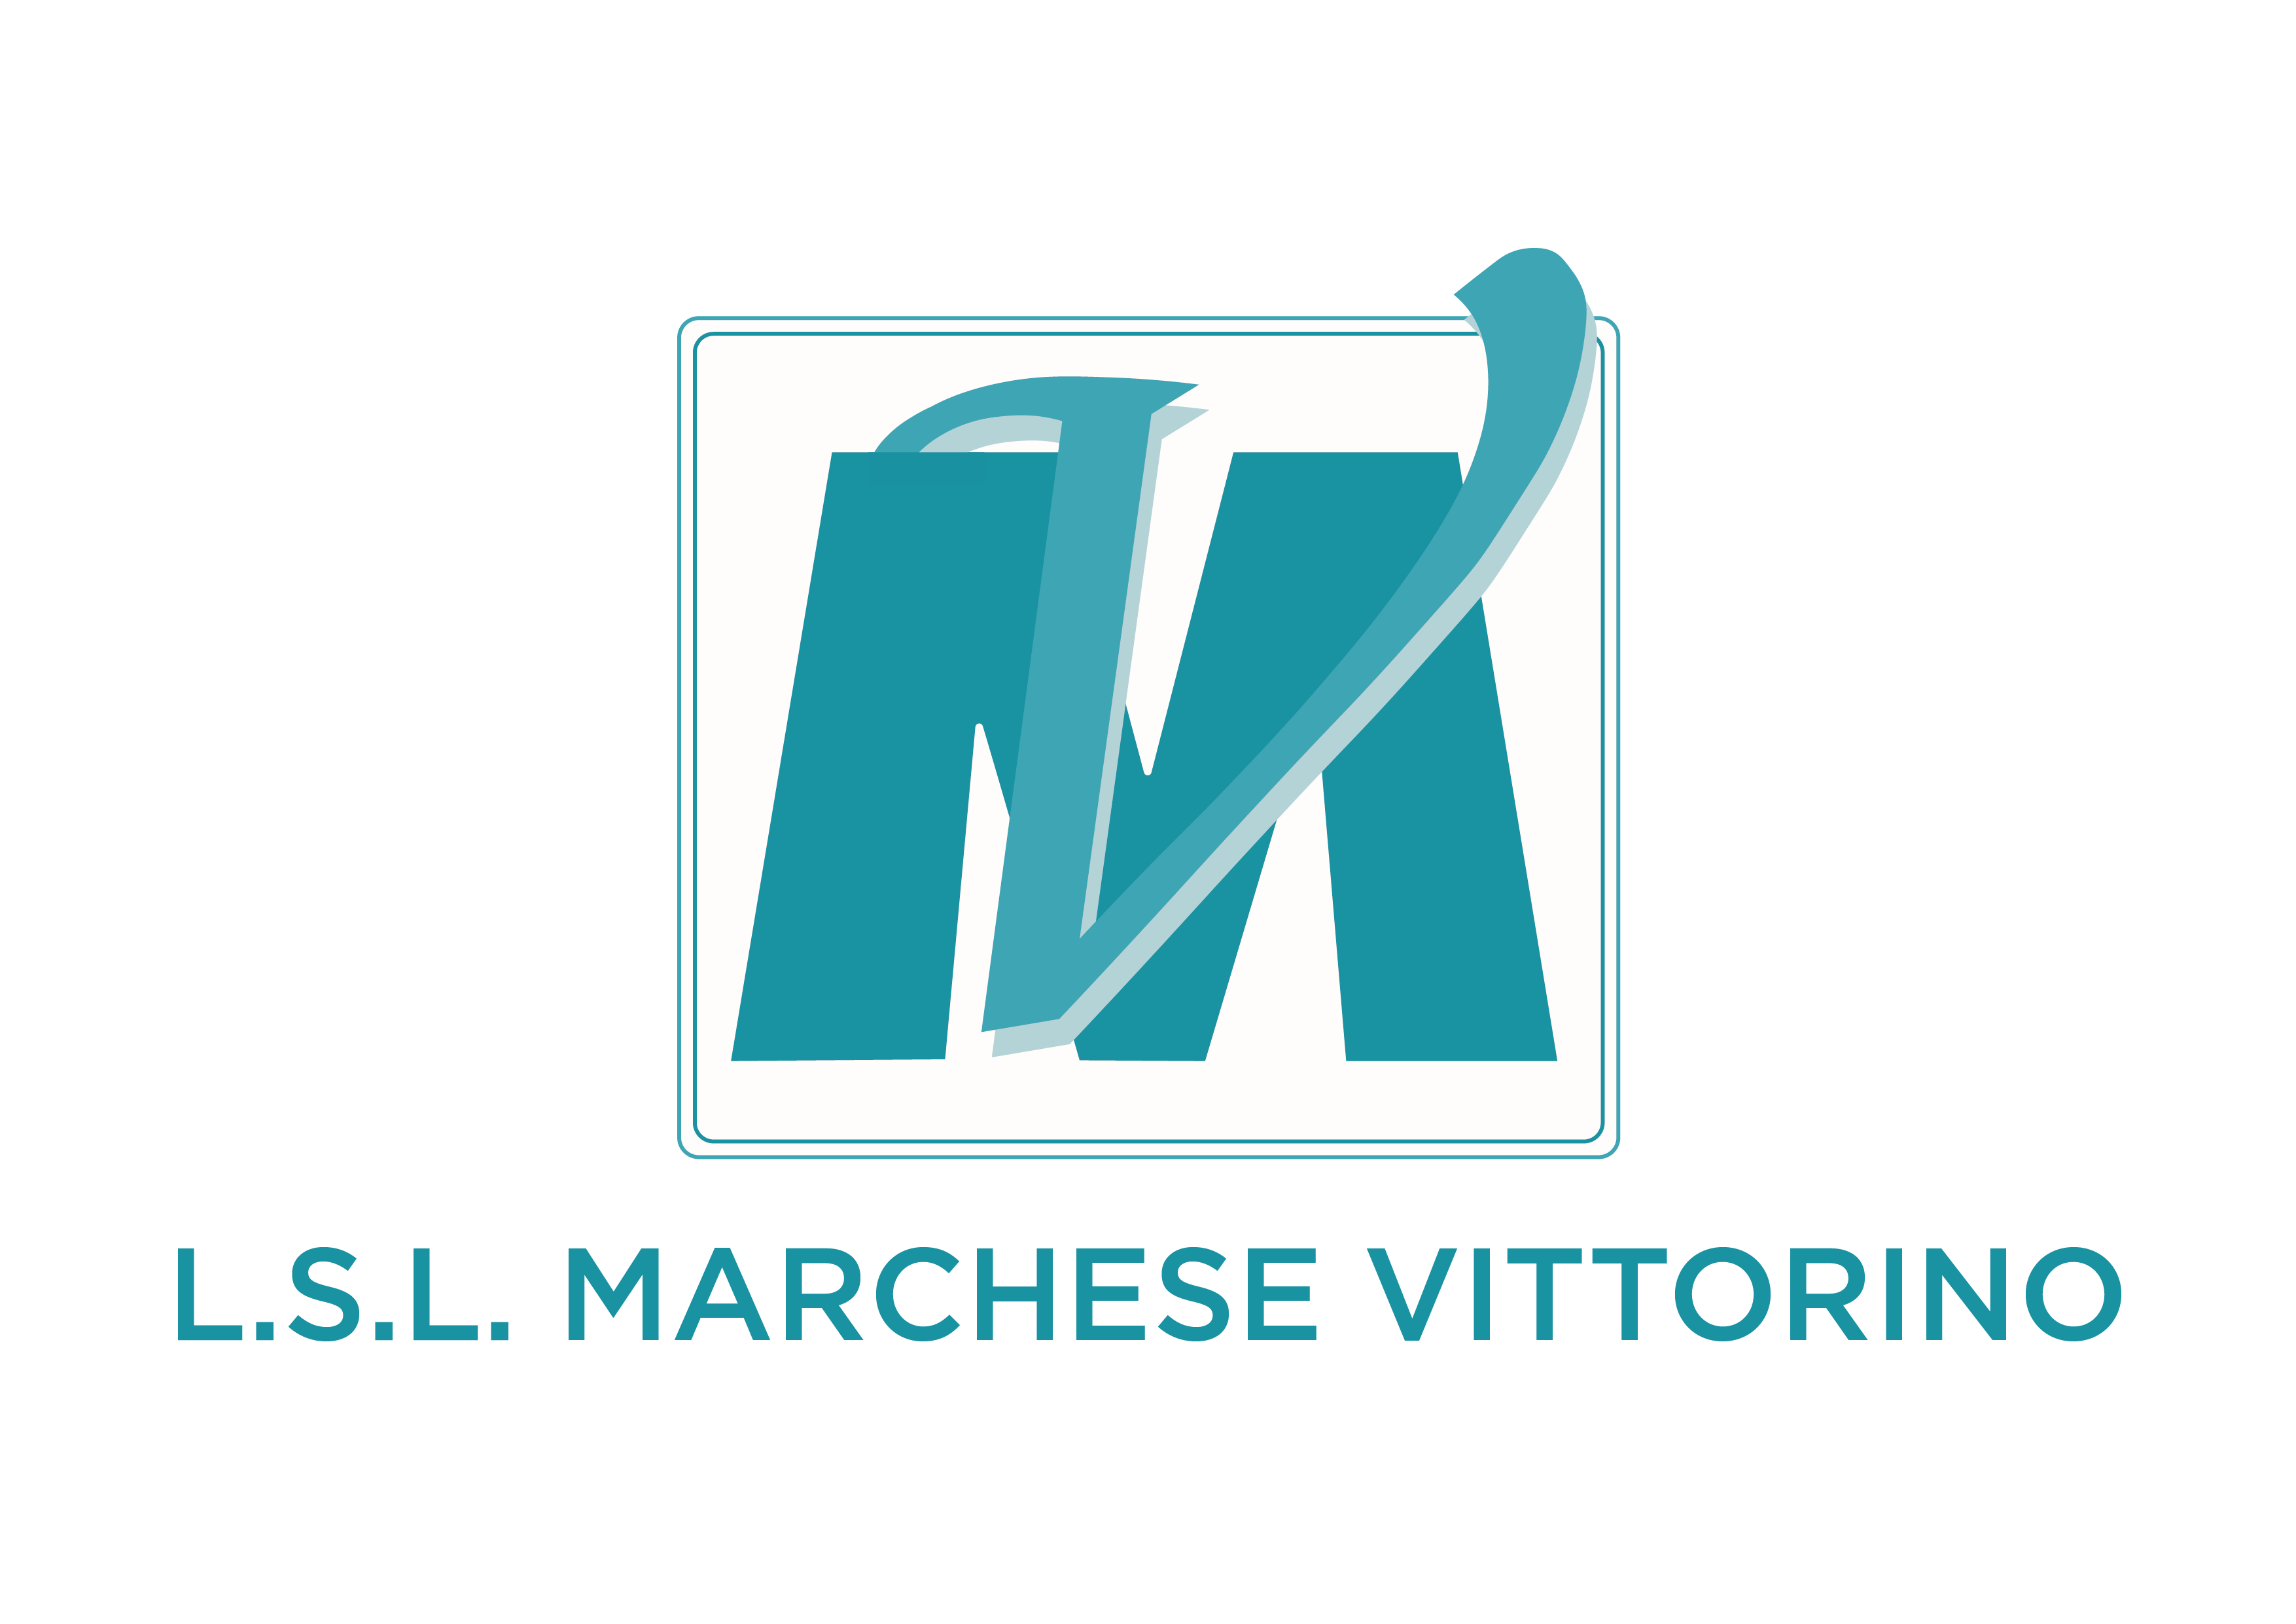 L.S.L. Marchese Vittorino